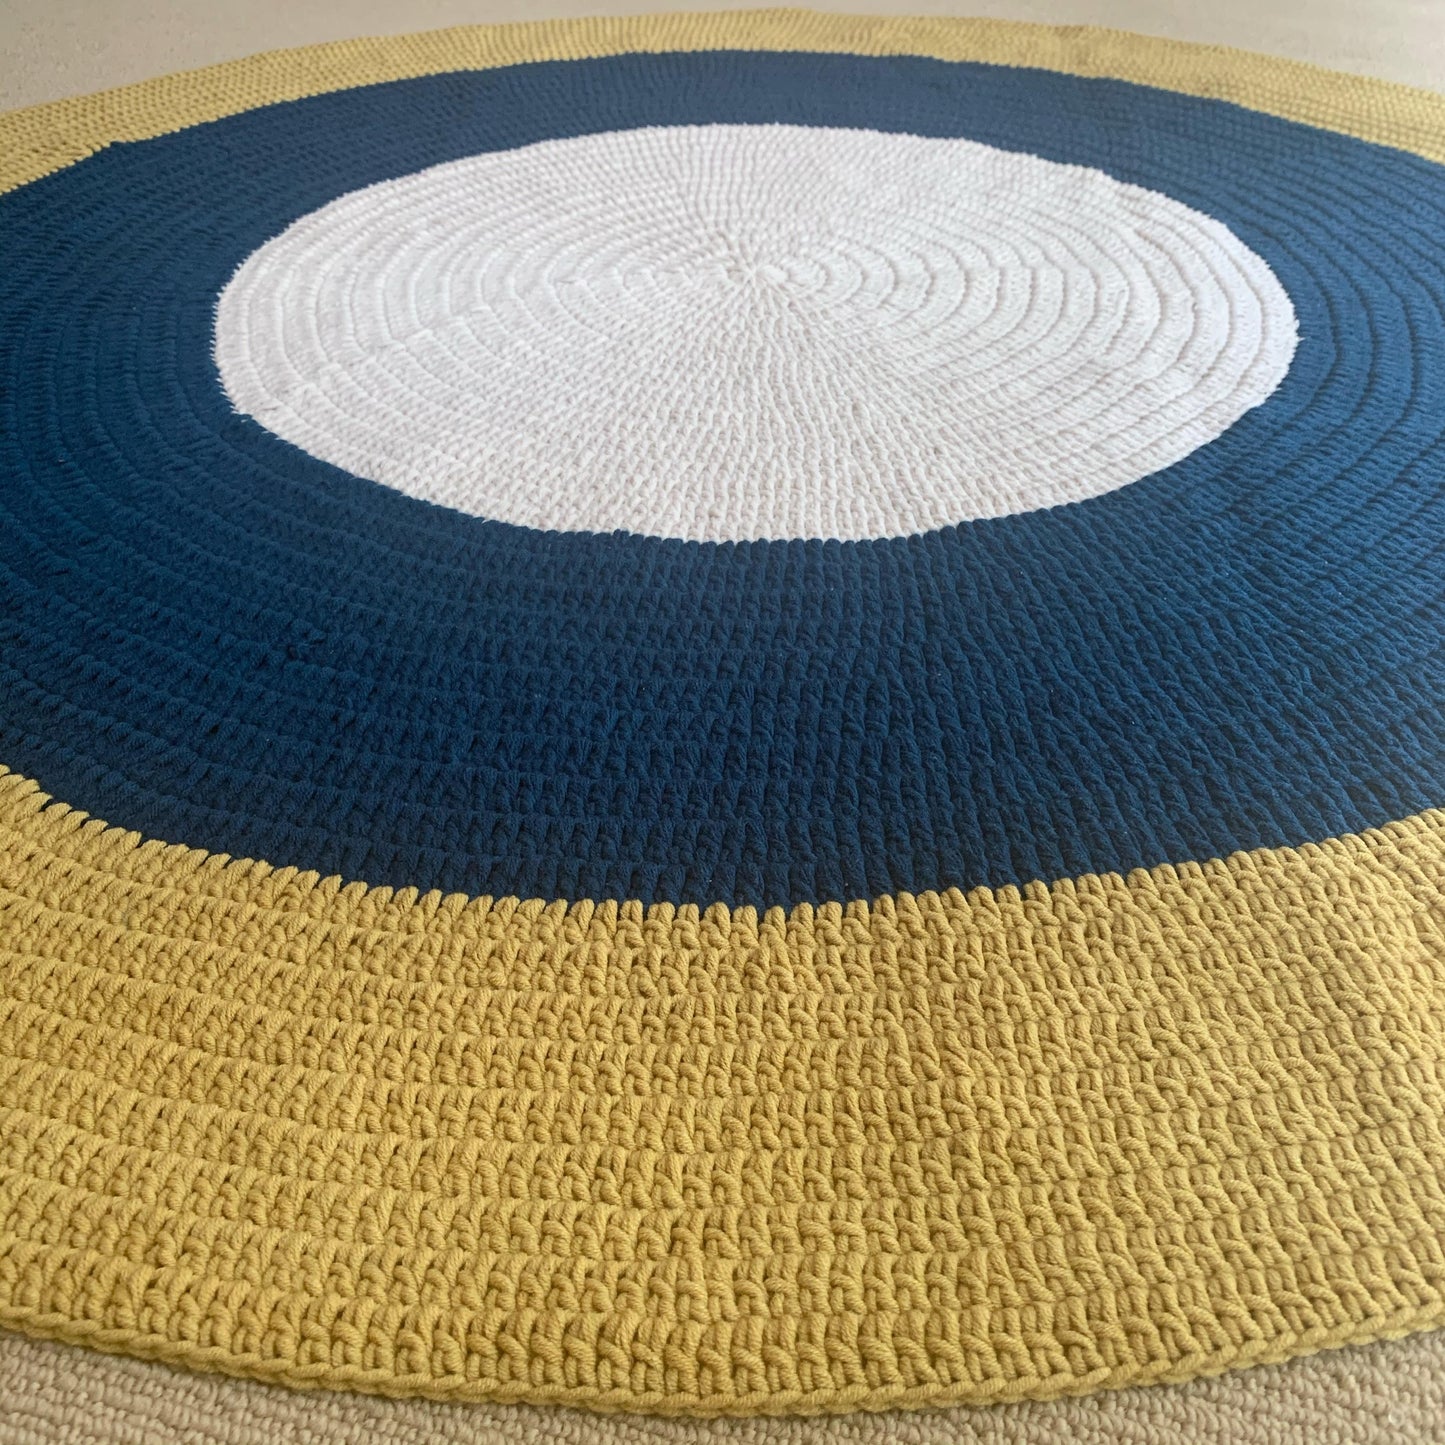 Nursery Round Crochet Rug - Navy Blue, Mustard + Cream